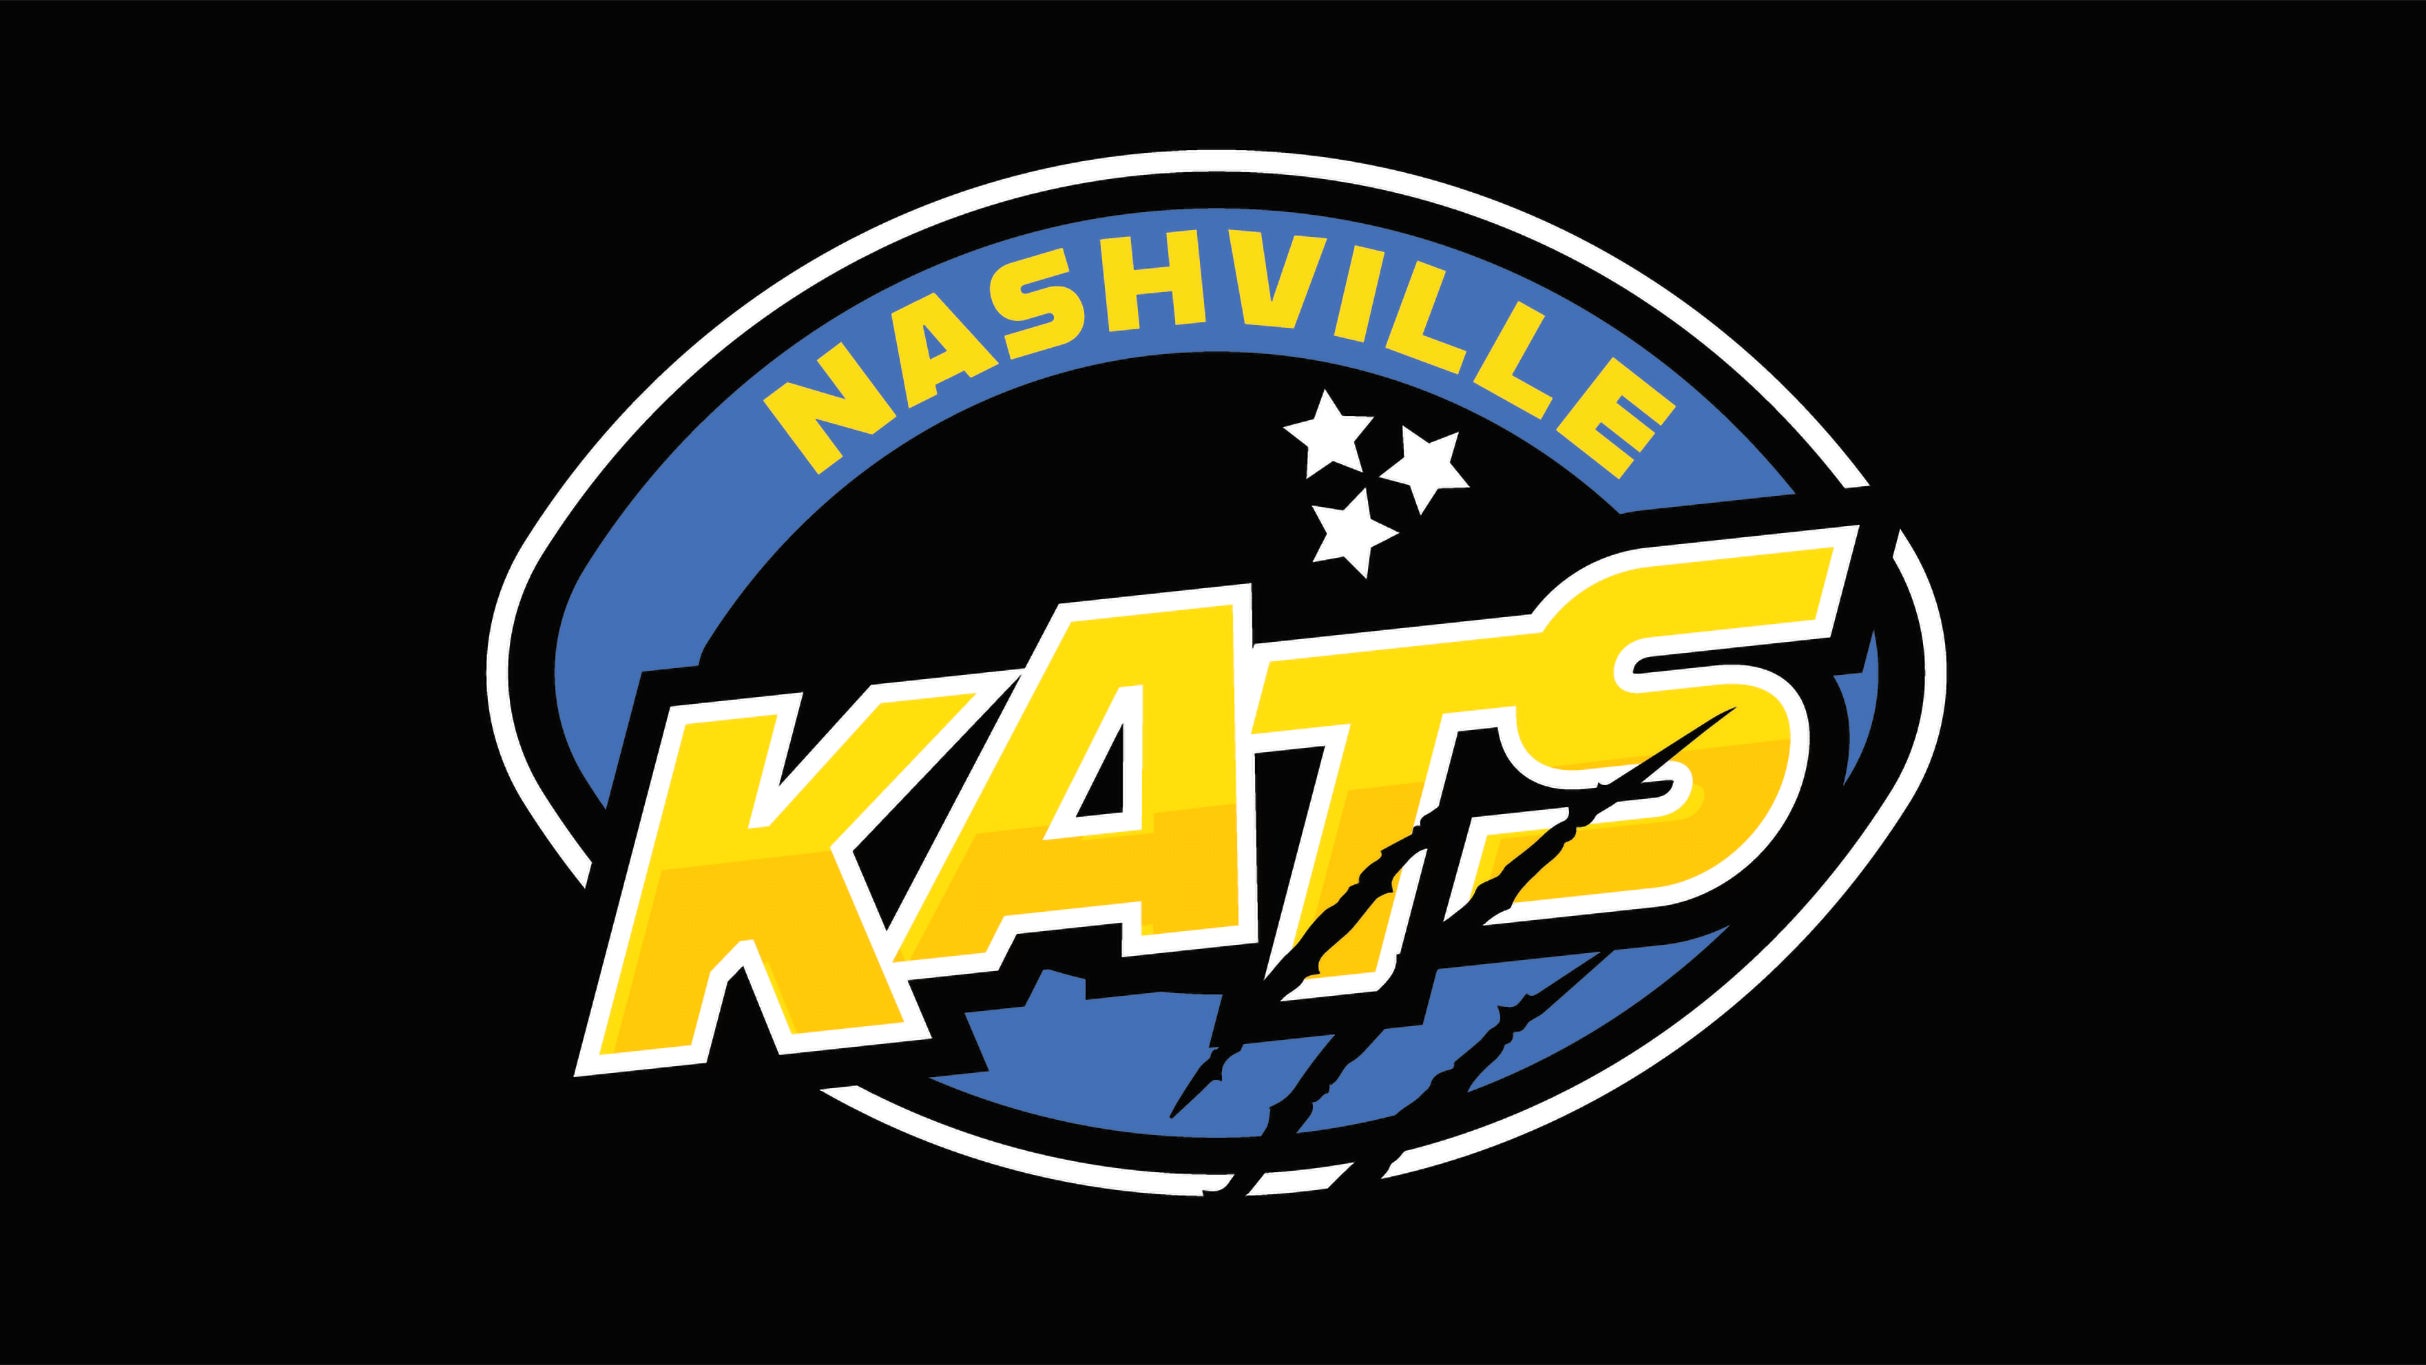 Nashville Kats presale information on freepresalepasswords.com